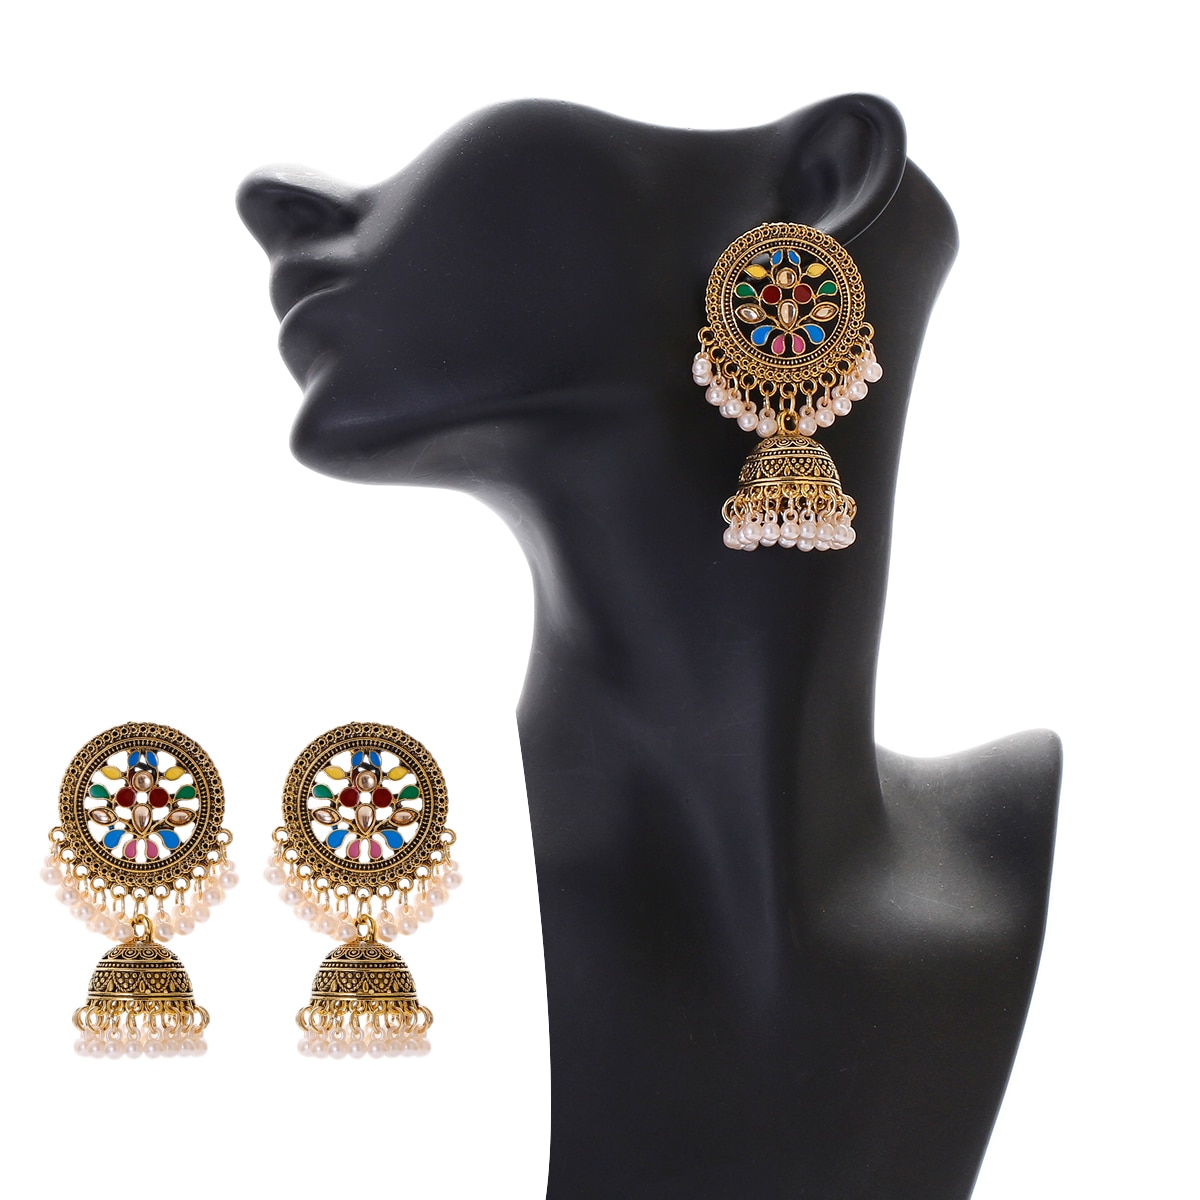 Classic-Round-Flower-India-EarringRing-Set-Women39s-Wedding-Jewelry-Hangers-Pearl-Beads-Jhumka-Earri-1005004392055409-7